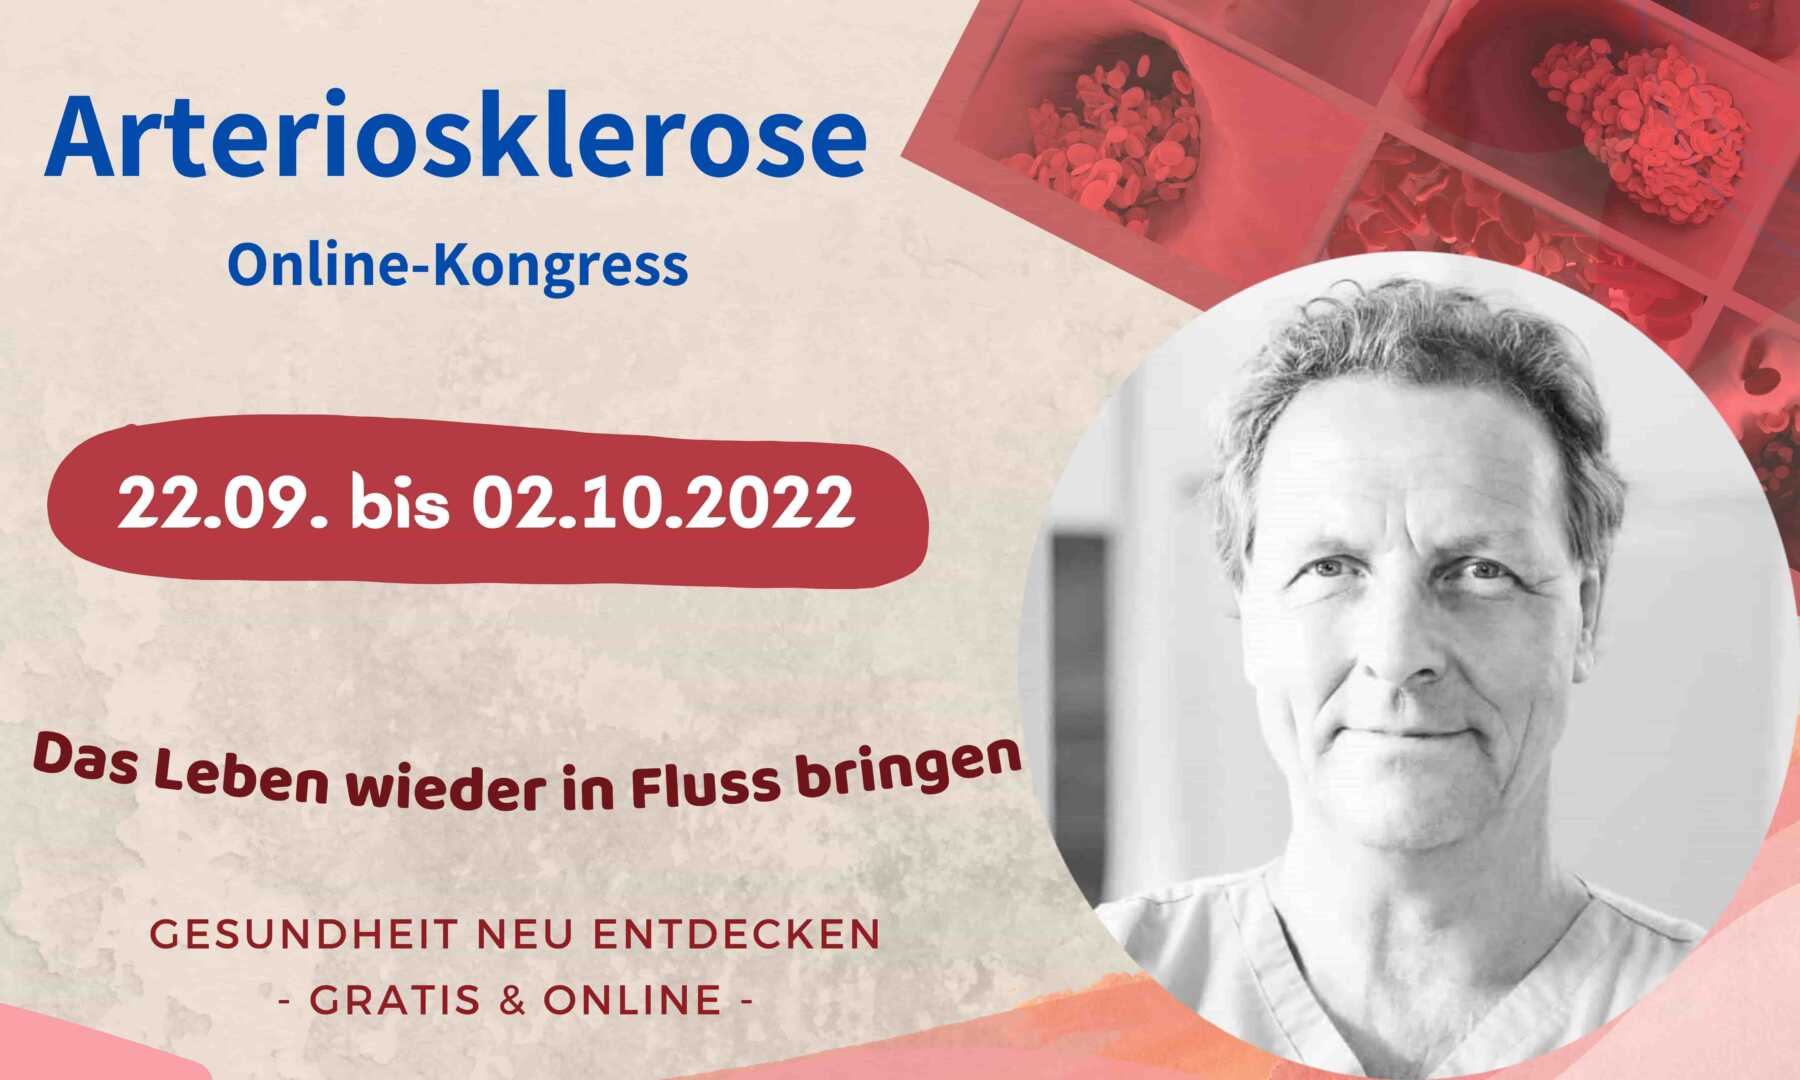 Dr. Gerstenberg, Arteriosklerose-online-Kongress